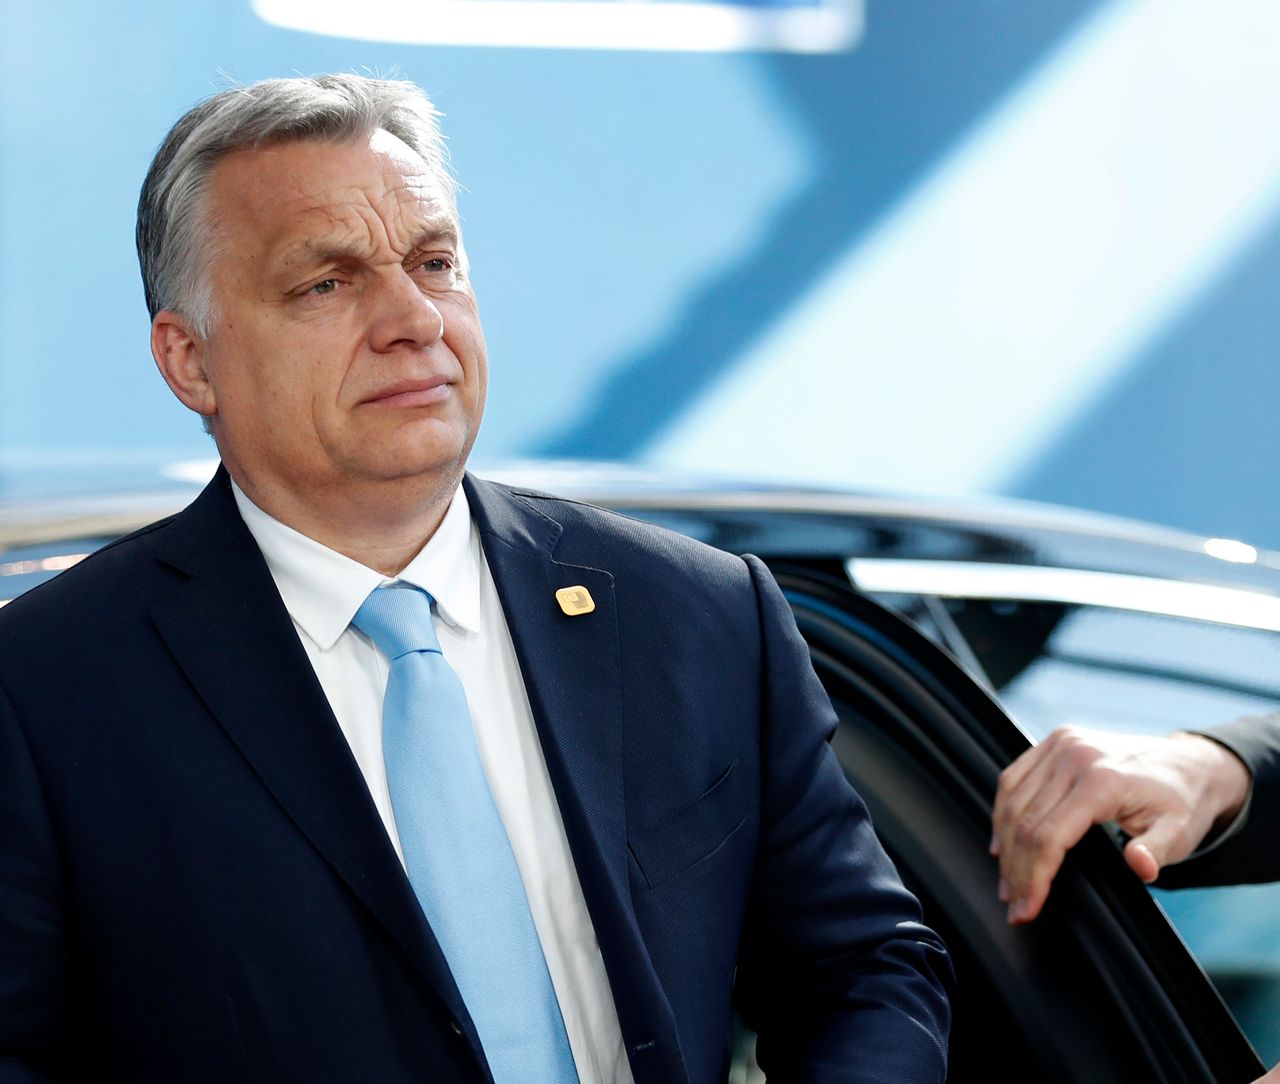 Viktor Orbán, the Hungarian prime minister